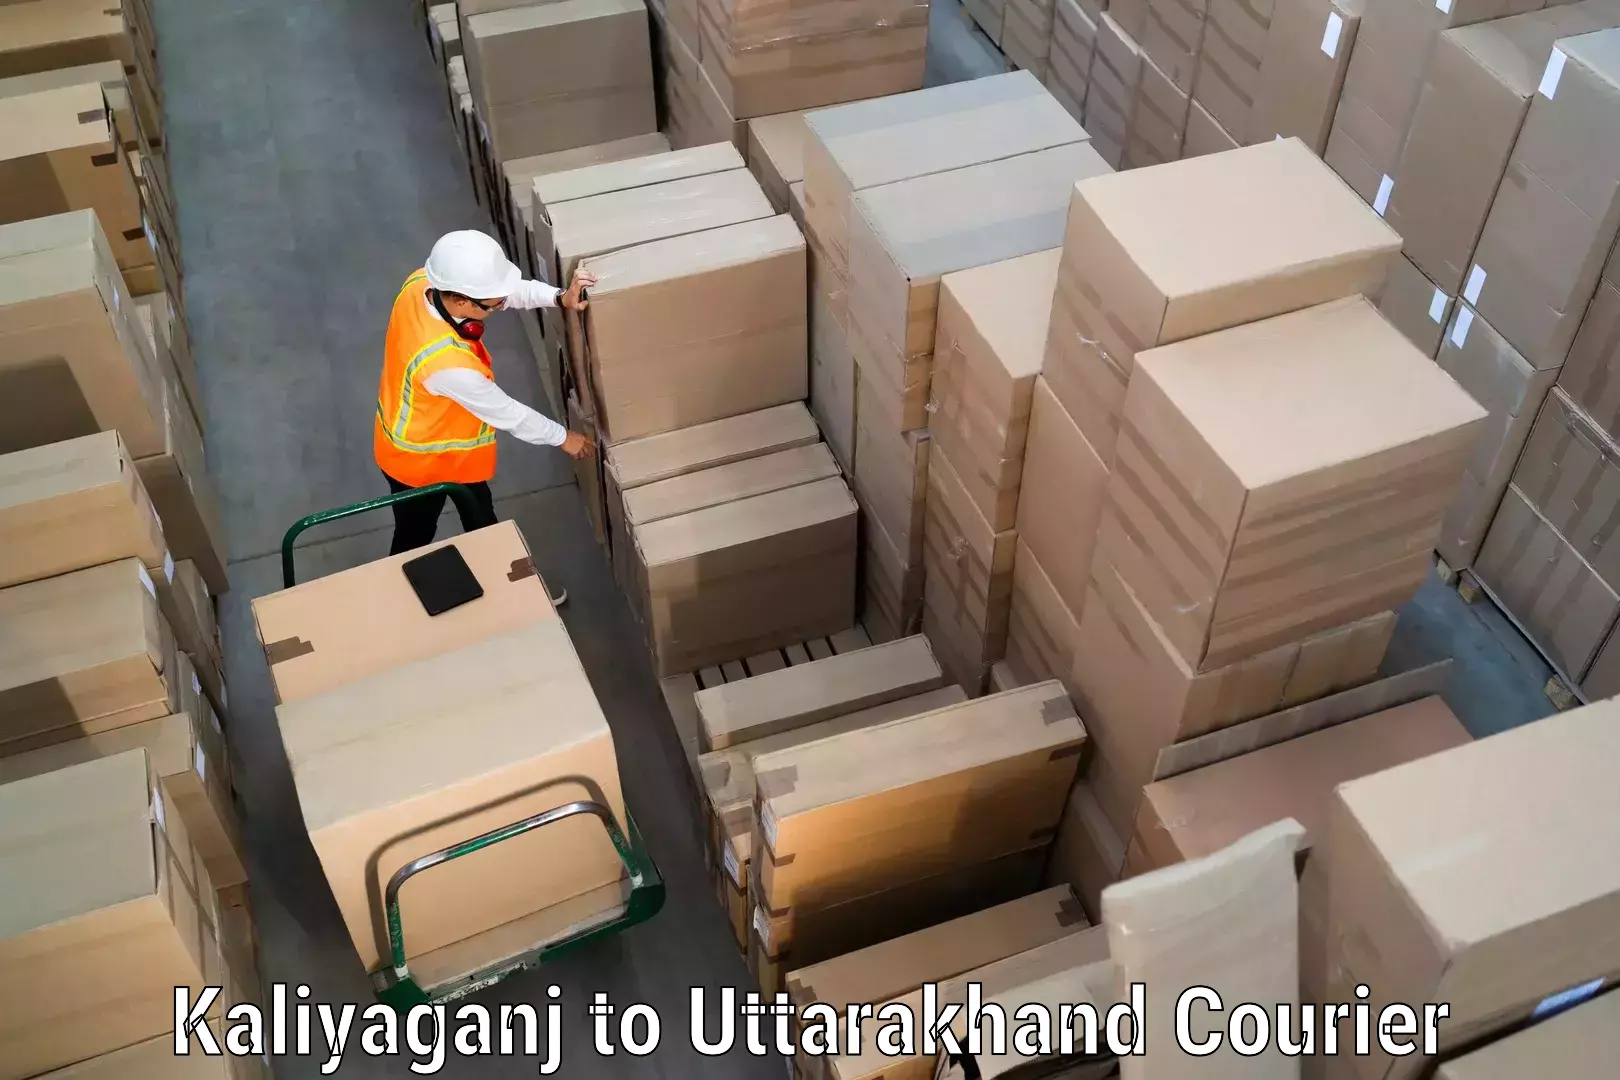 Efficient order fulfillment Kaliyaganj to Uttarakhand